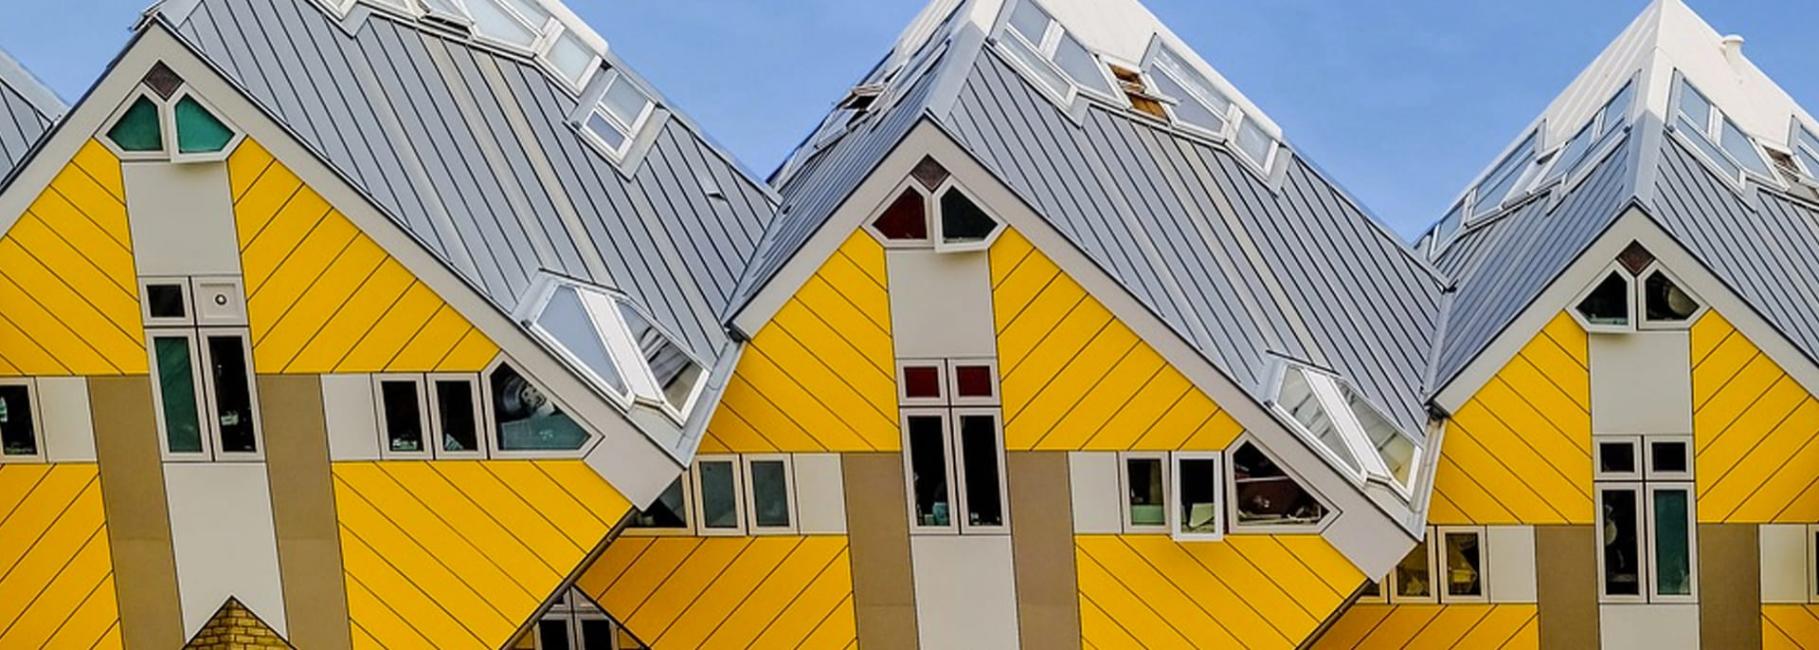 rotterdam architecture trip header slk fe